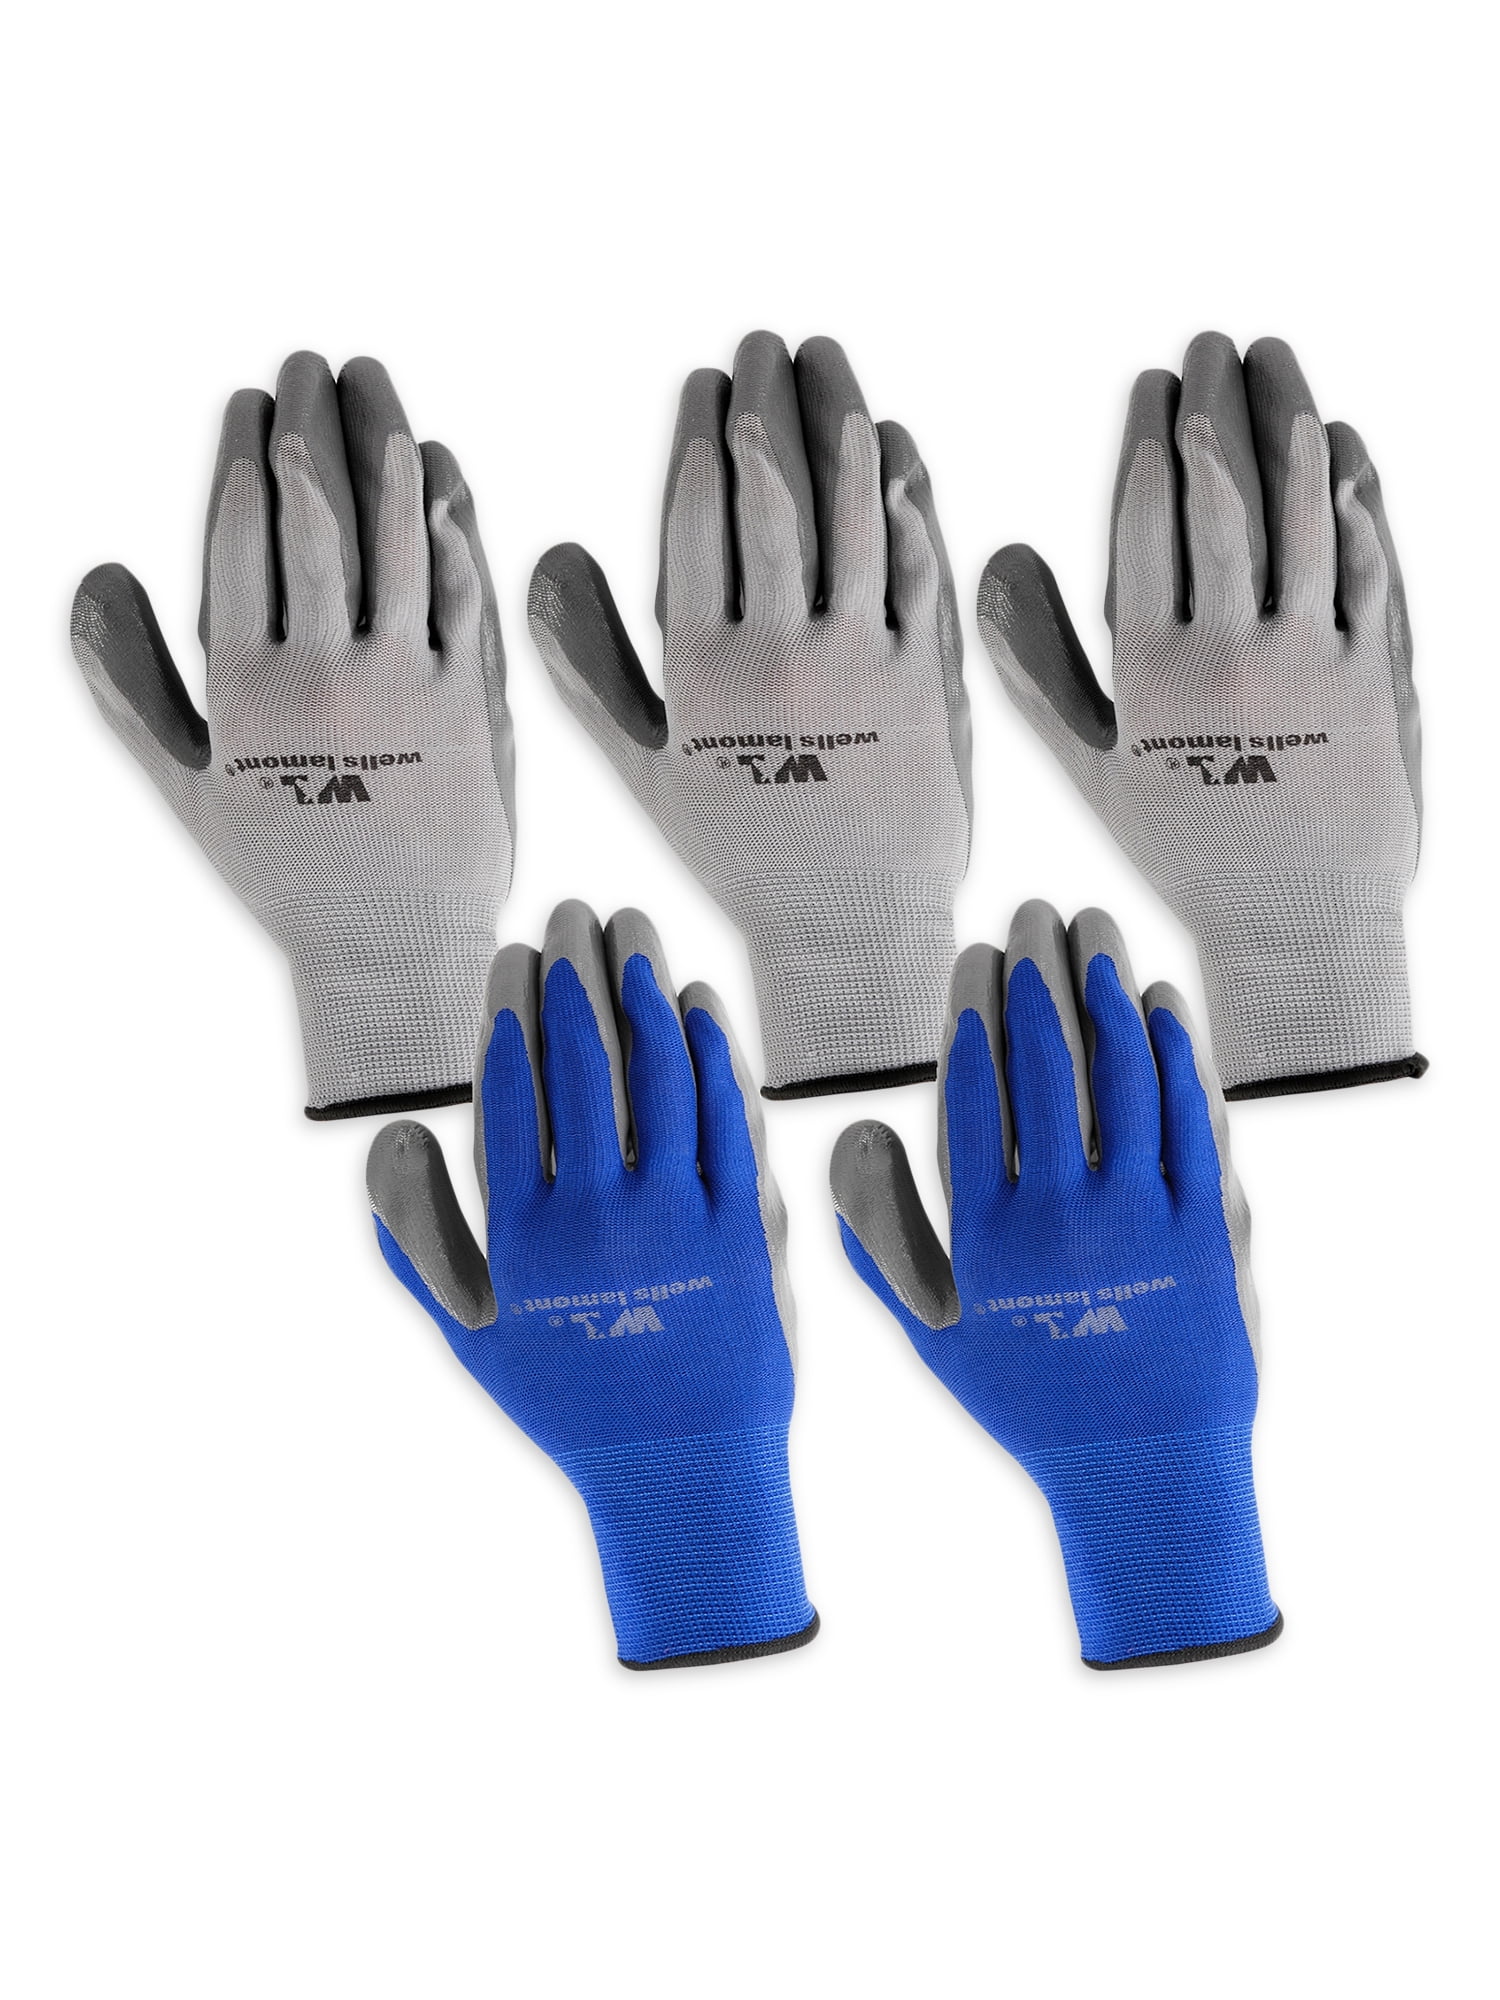 Ultimate Industrial Aquatek Dual Coated Latex Knitted Wrist Gloves 